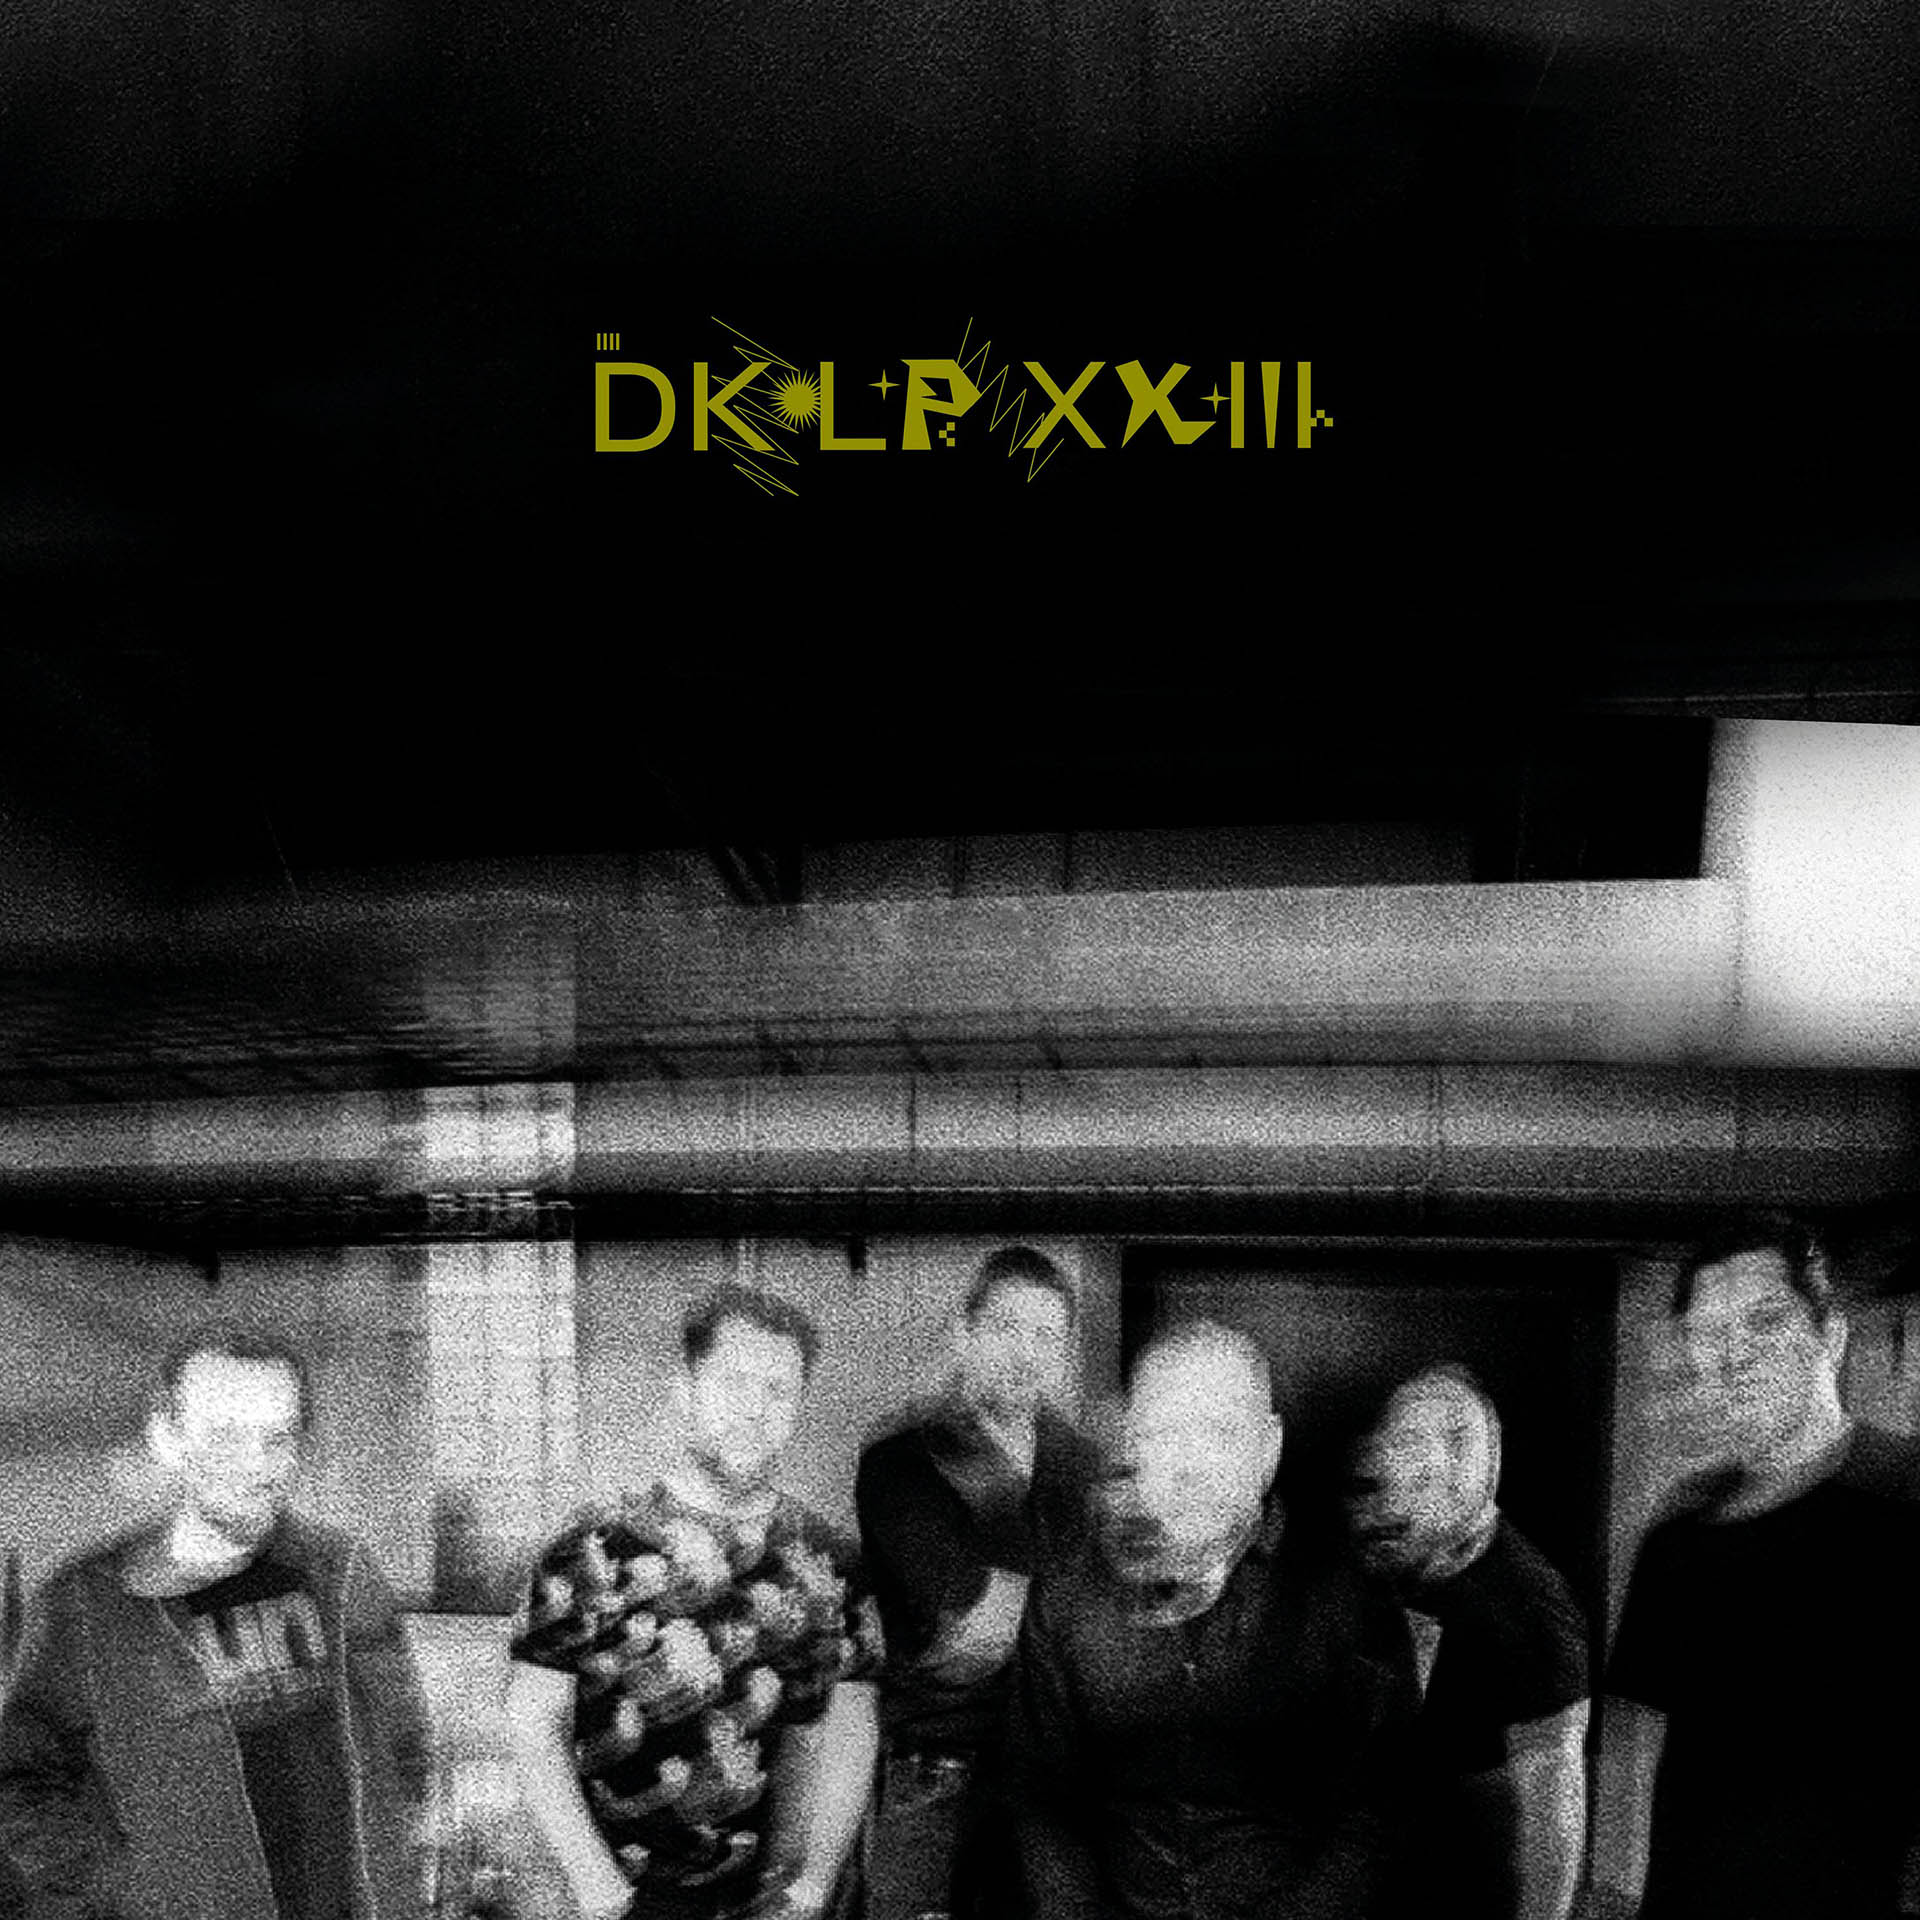 David Koller – LP XIII